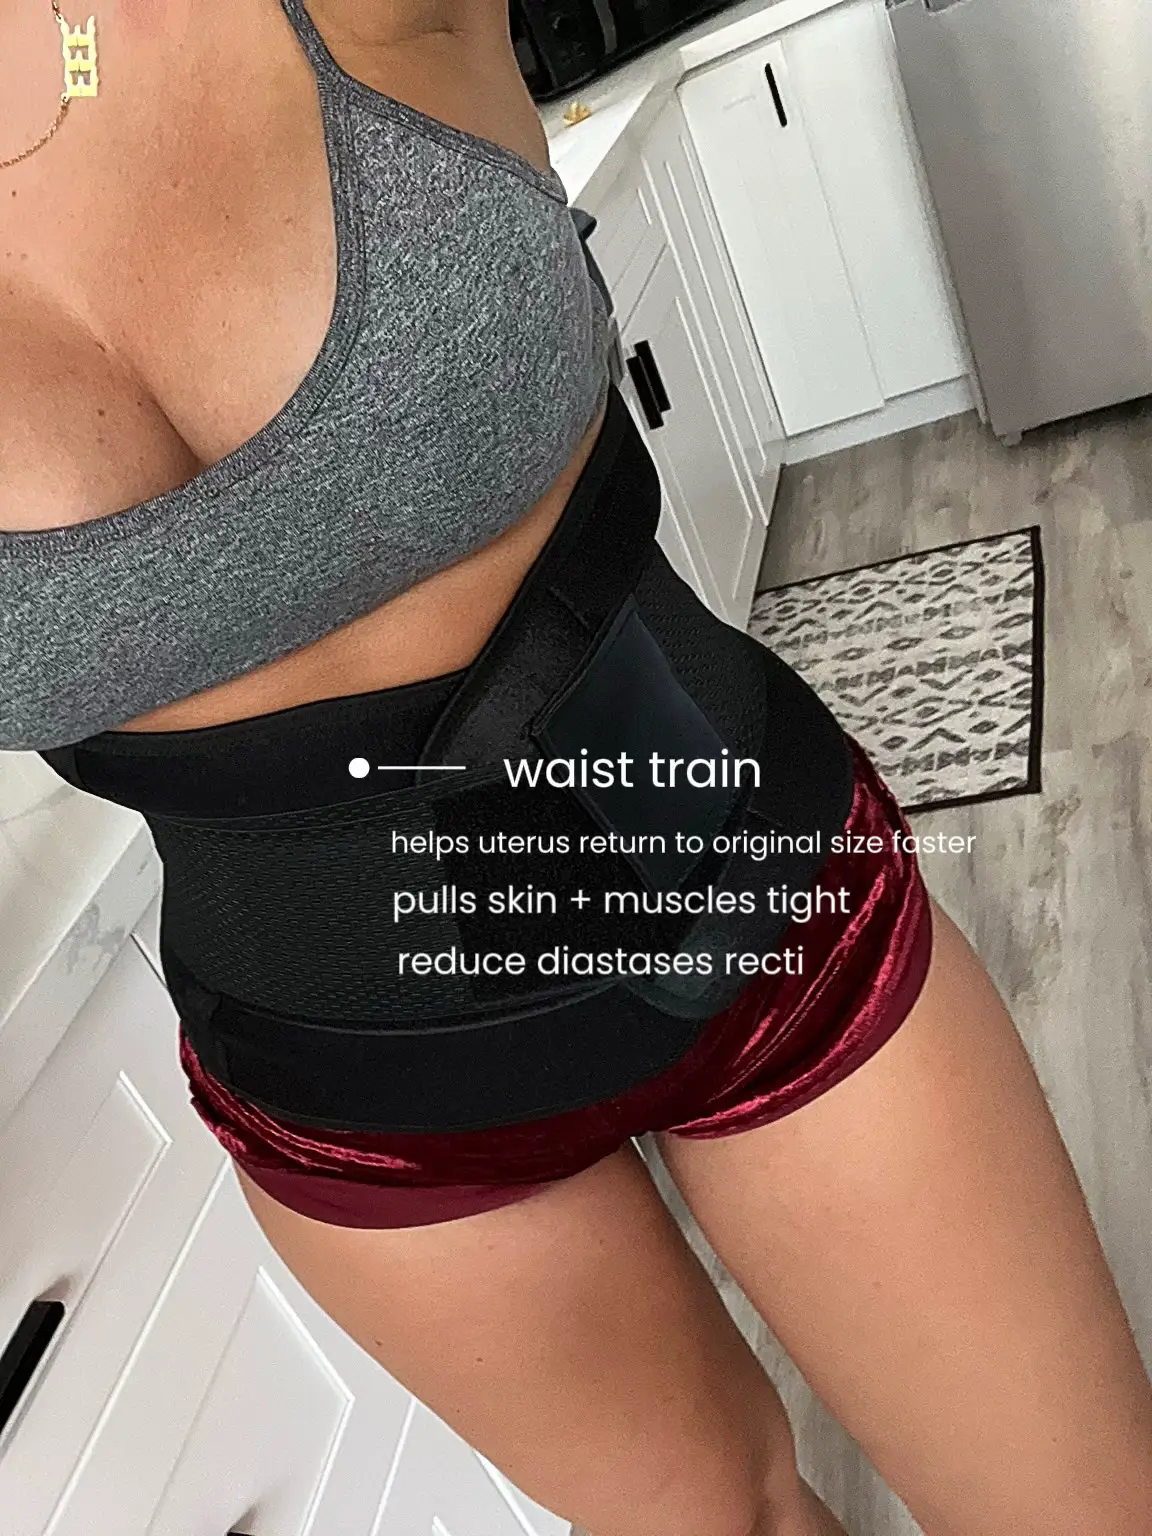 I walk in boobs first . Ah a push-up bra does wonders lol : r